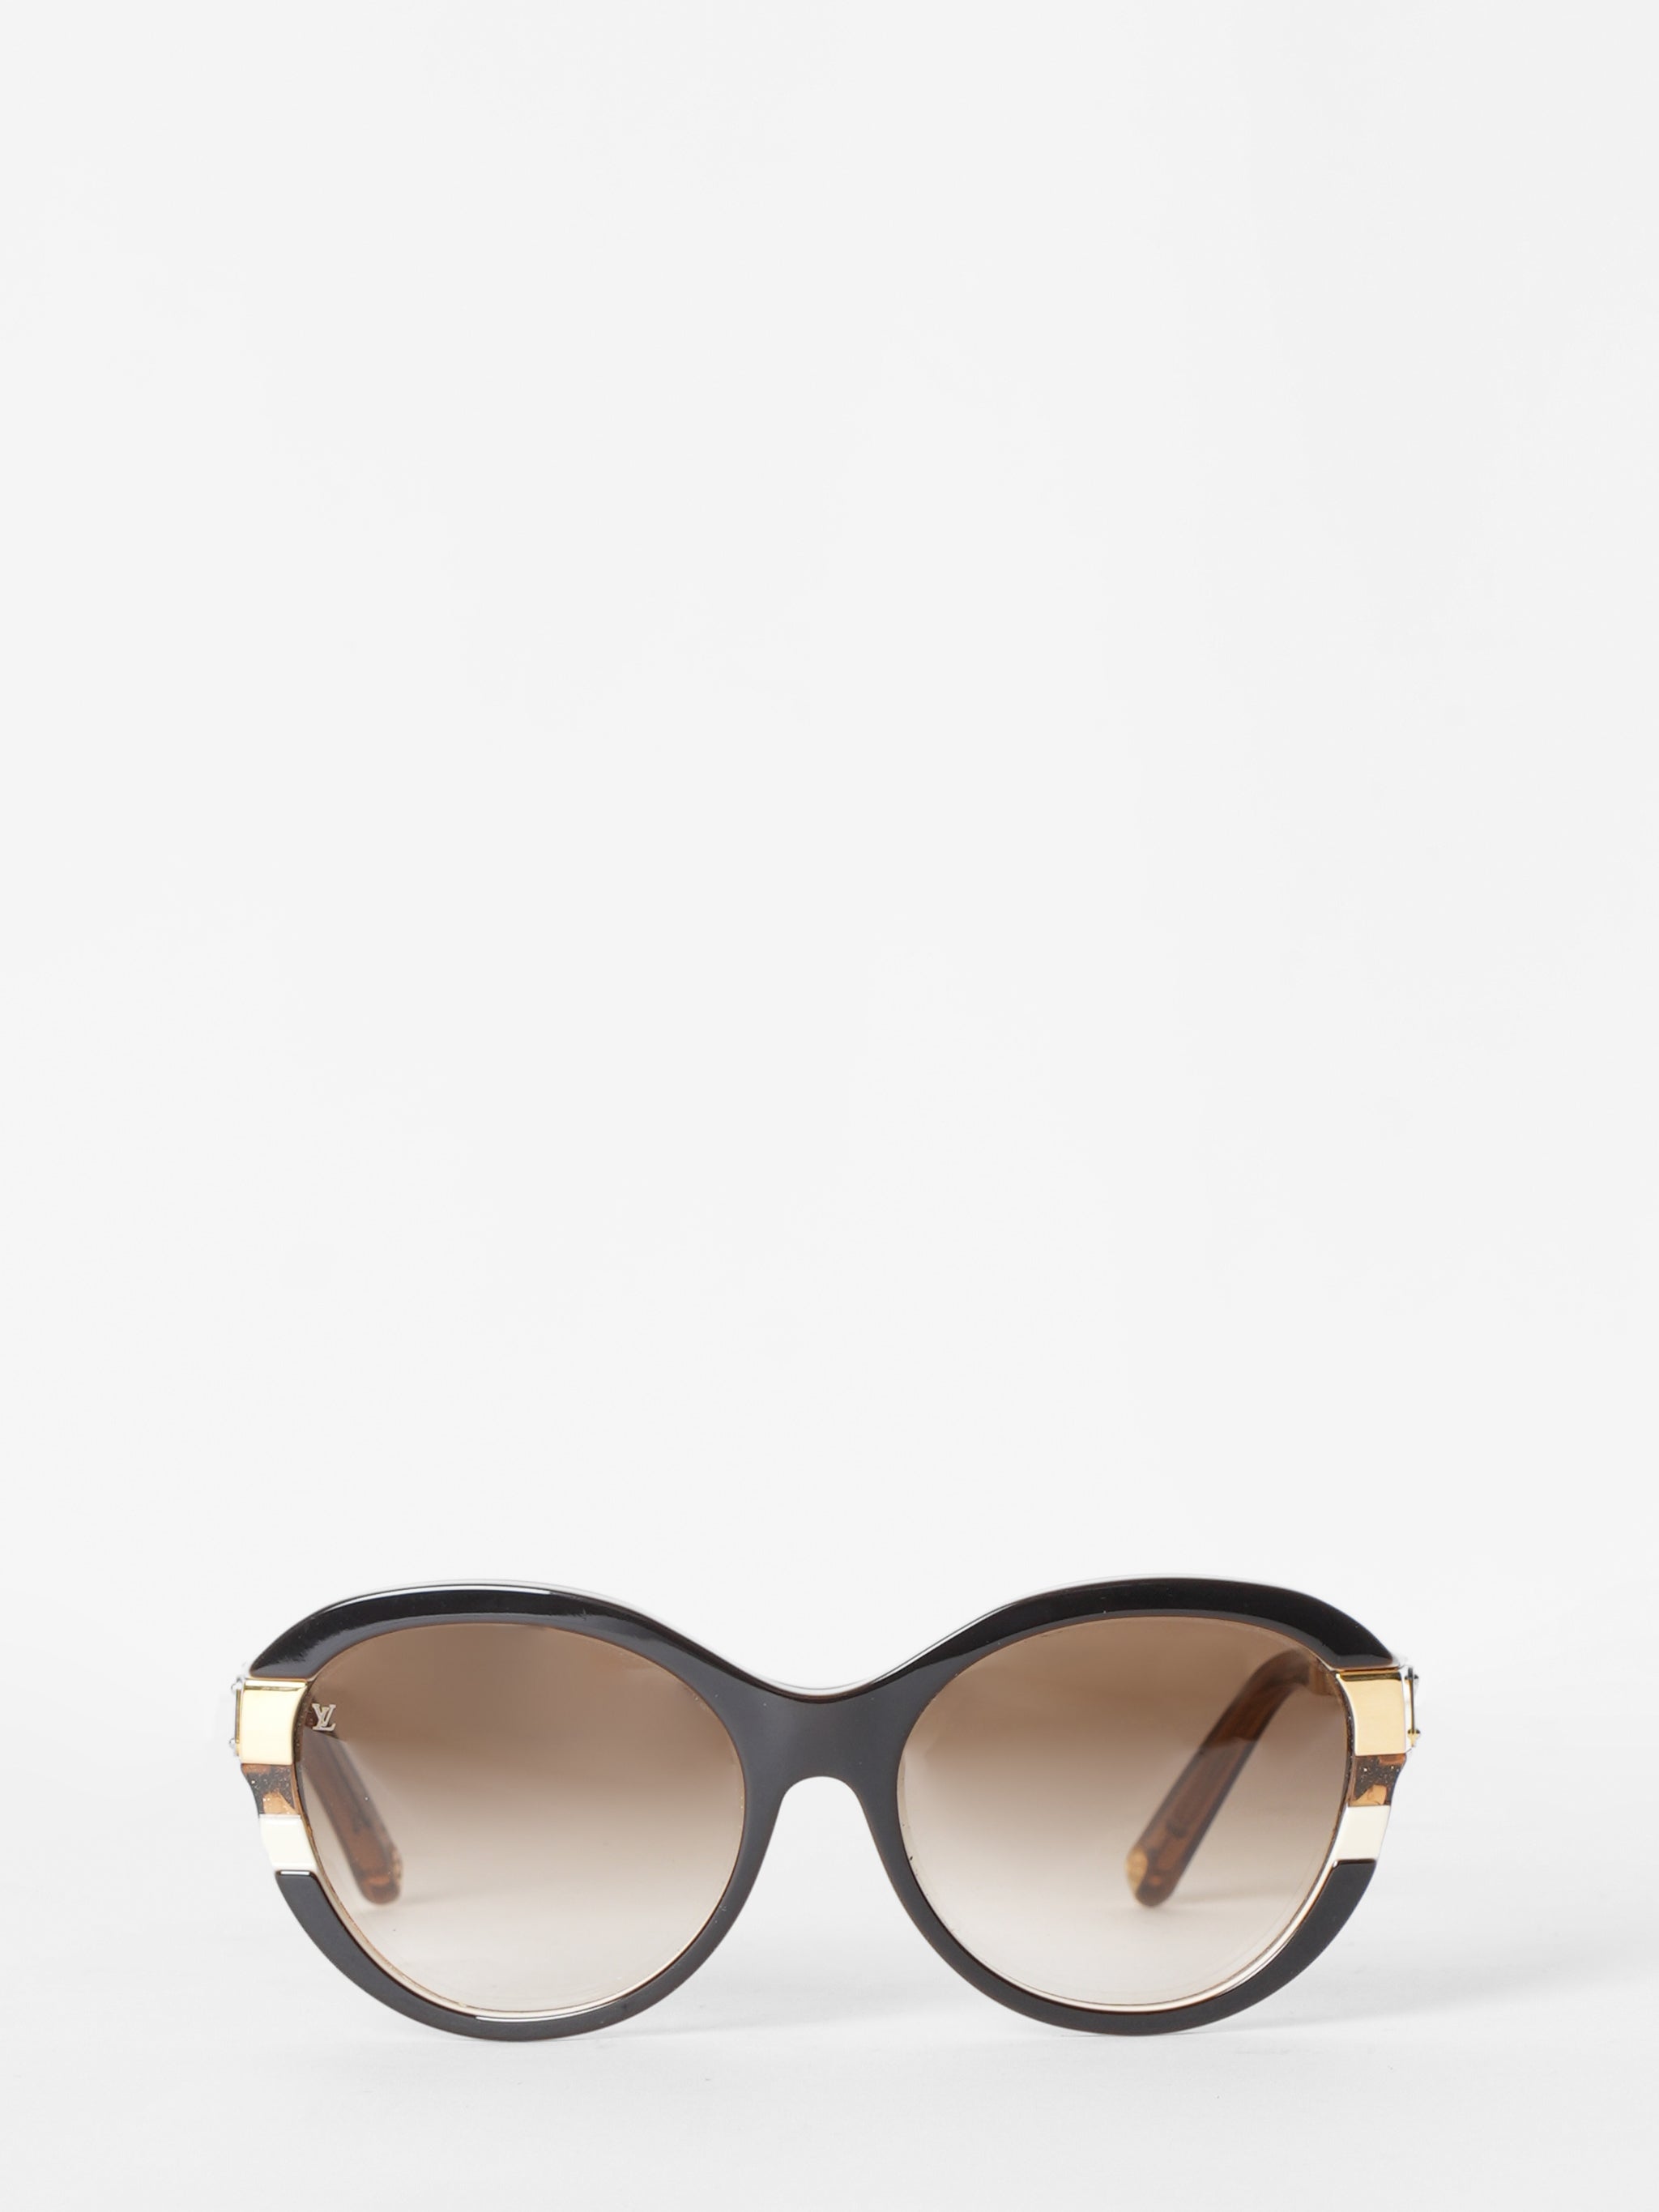 Louis Vuitton Cat Eye Sunglasses